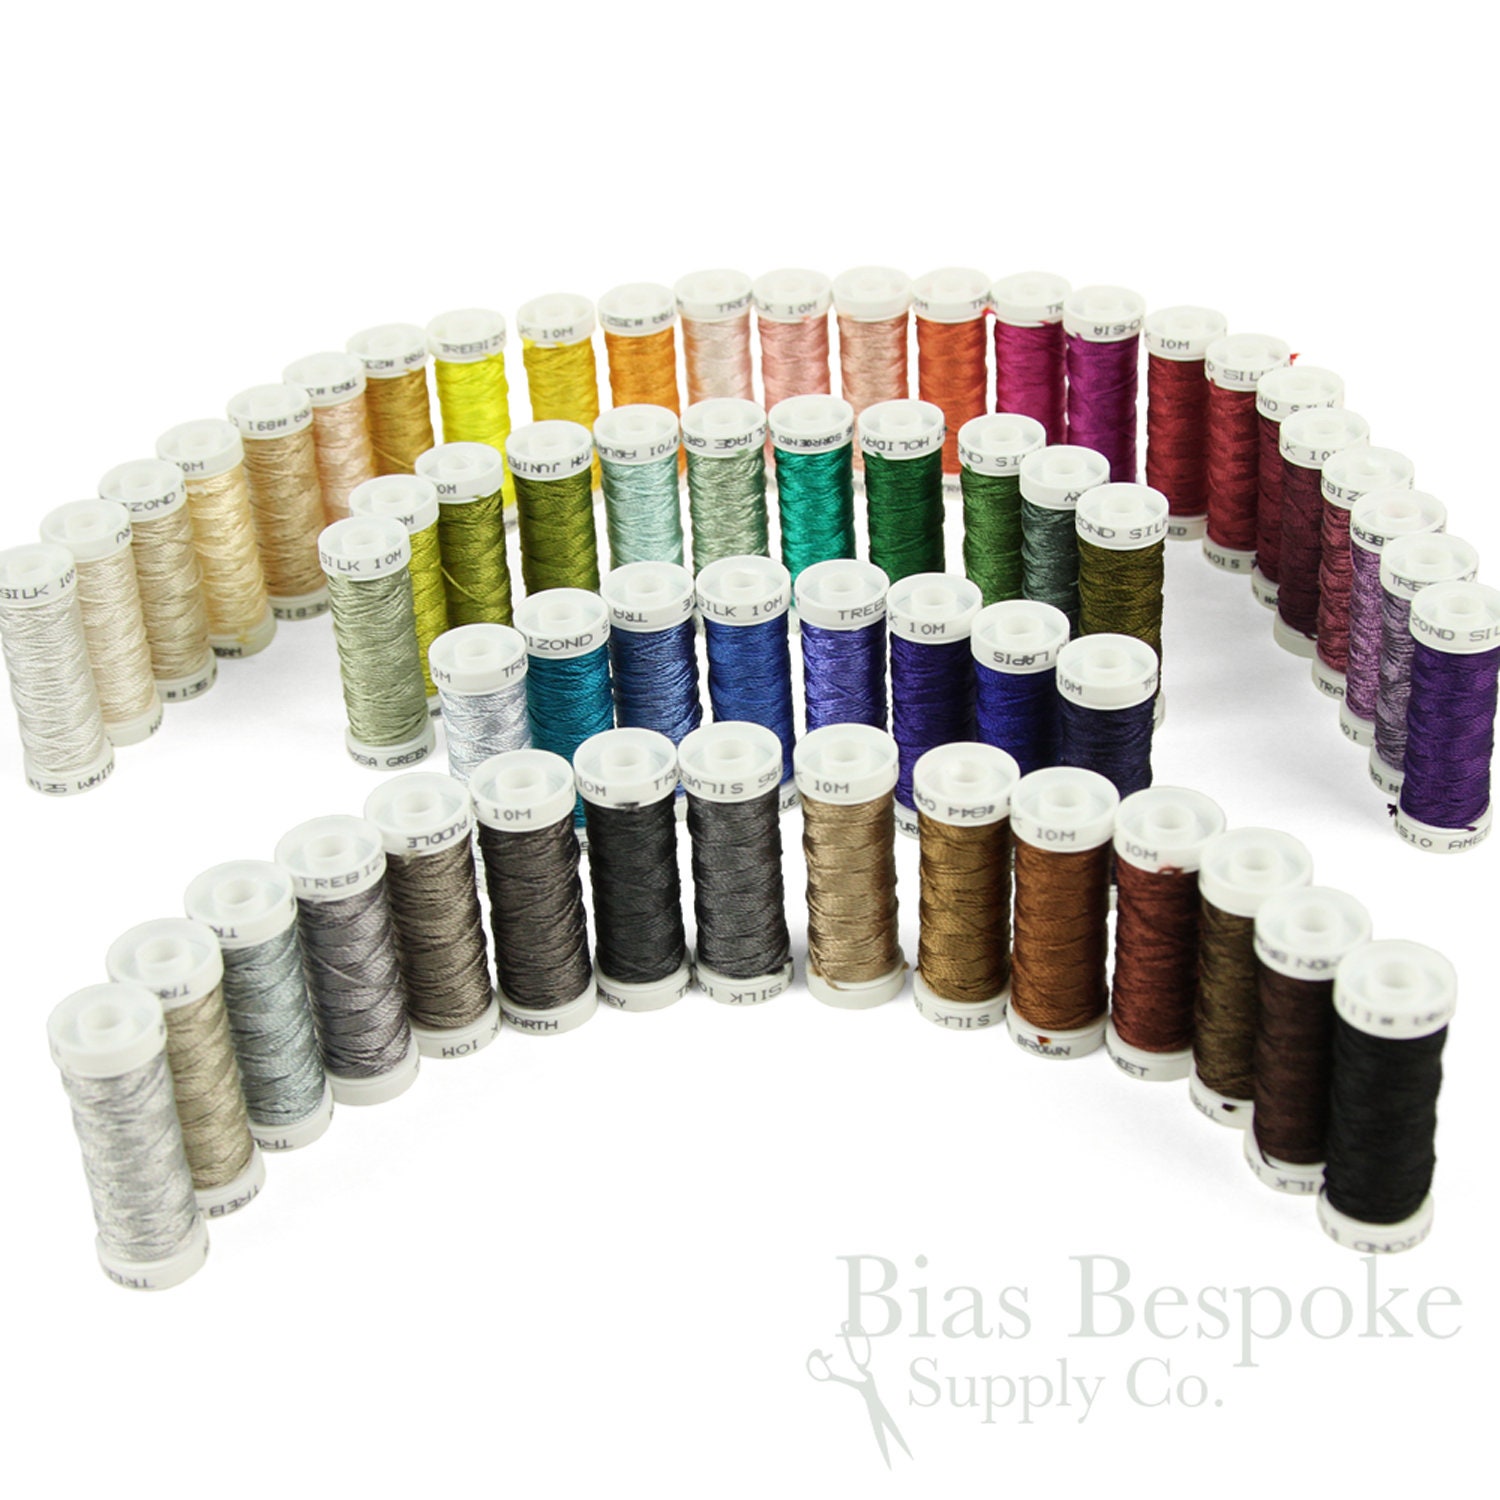 Authentic Au Ver A Soie D’Alger Pure Silk Embroidery Thread Set of 25 Colors